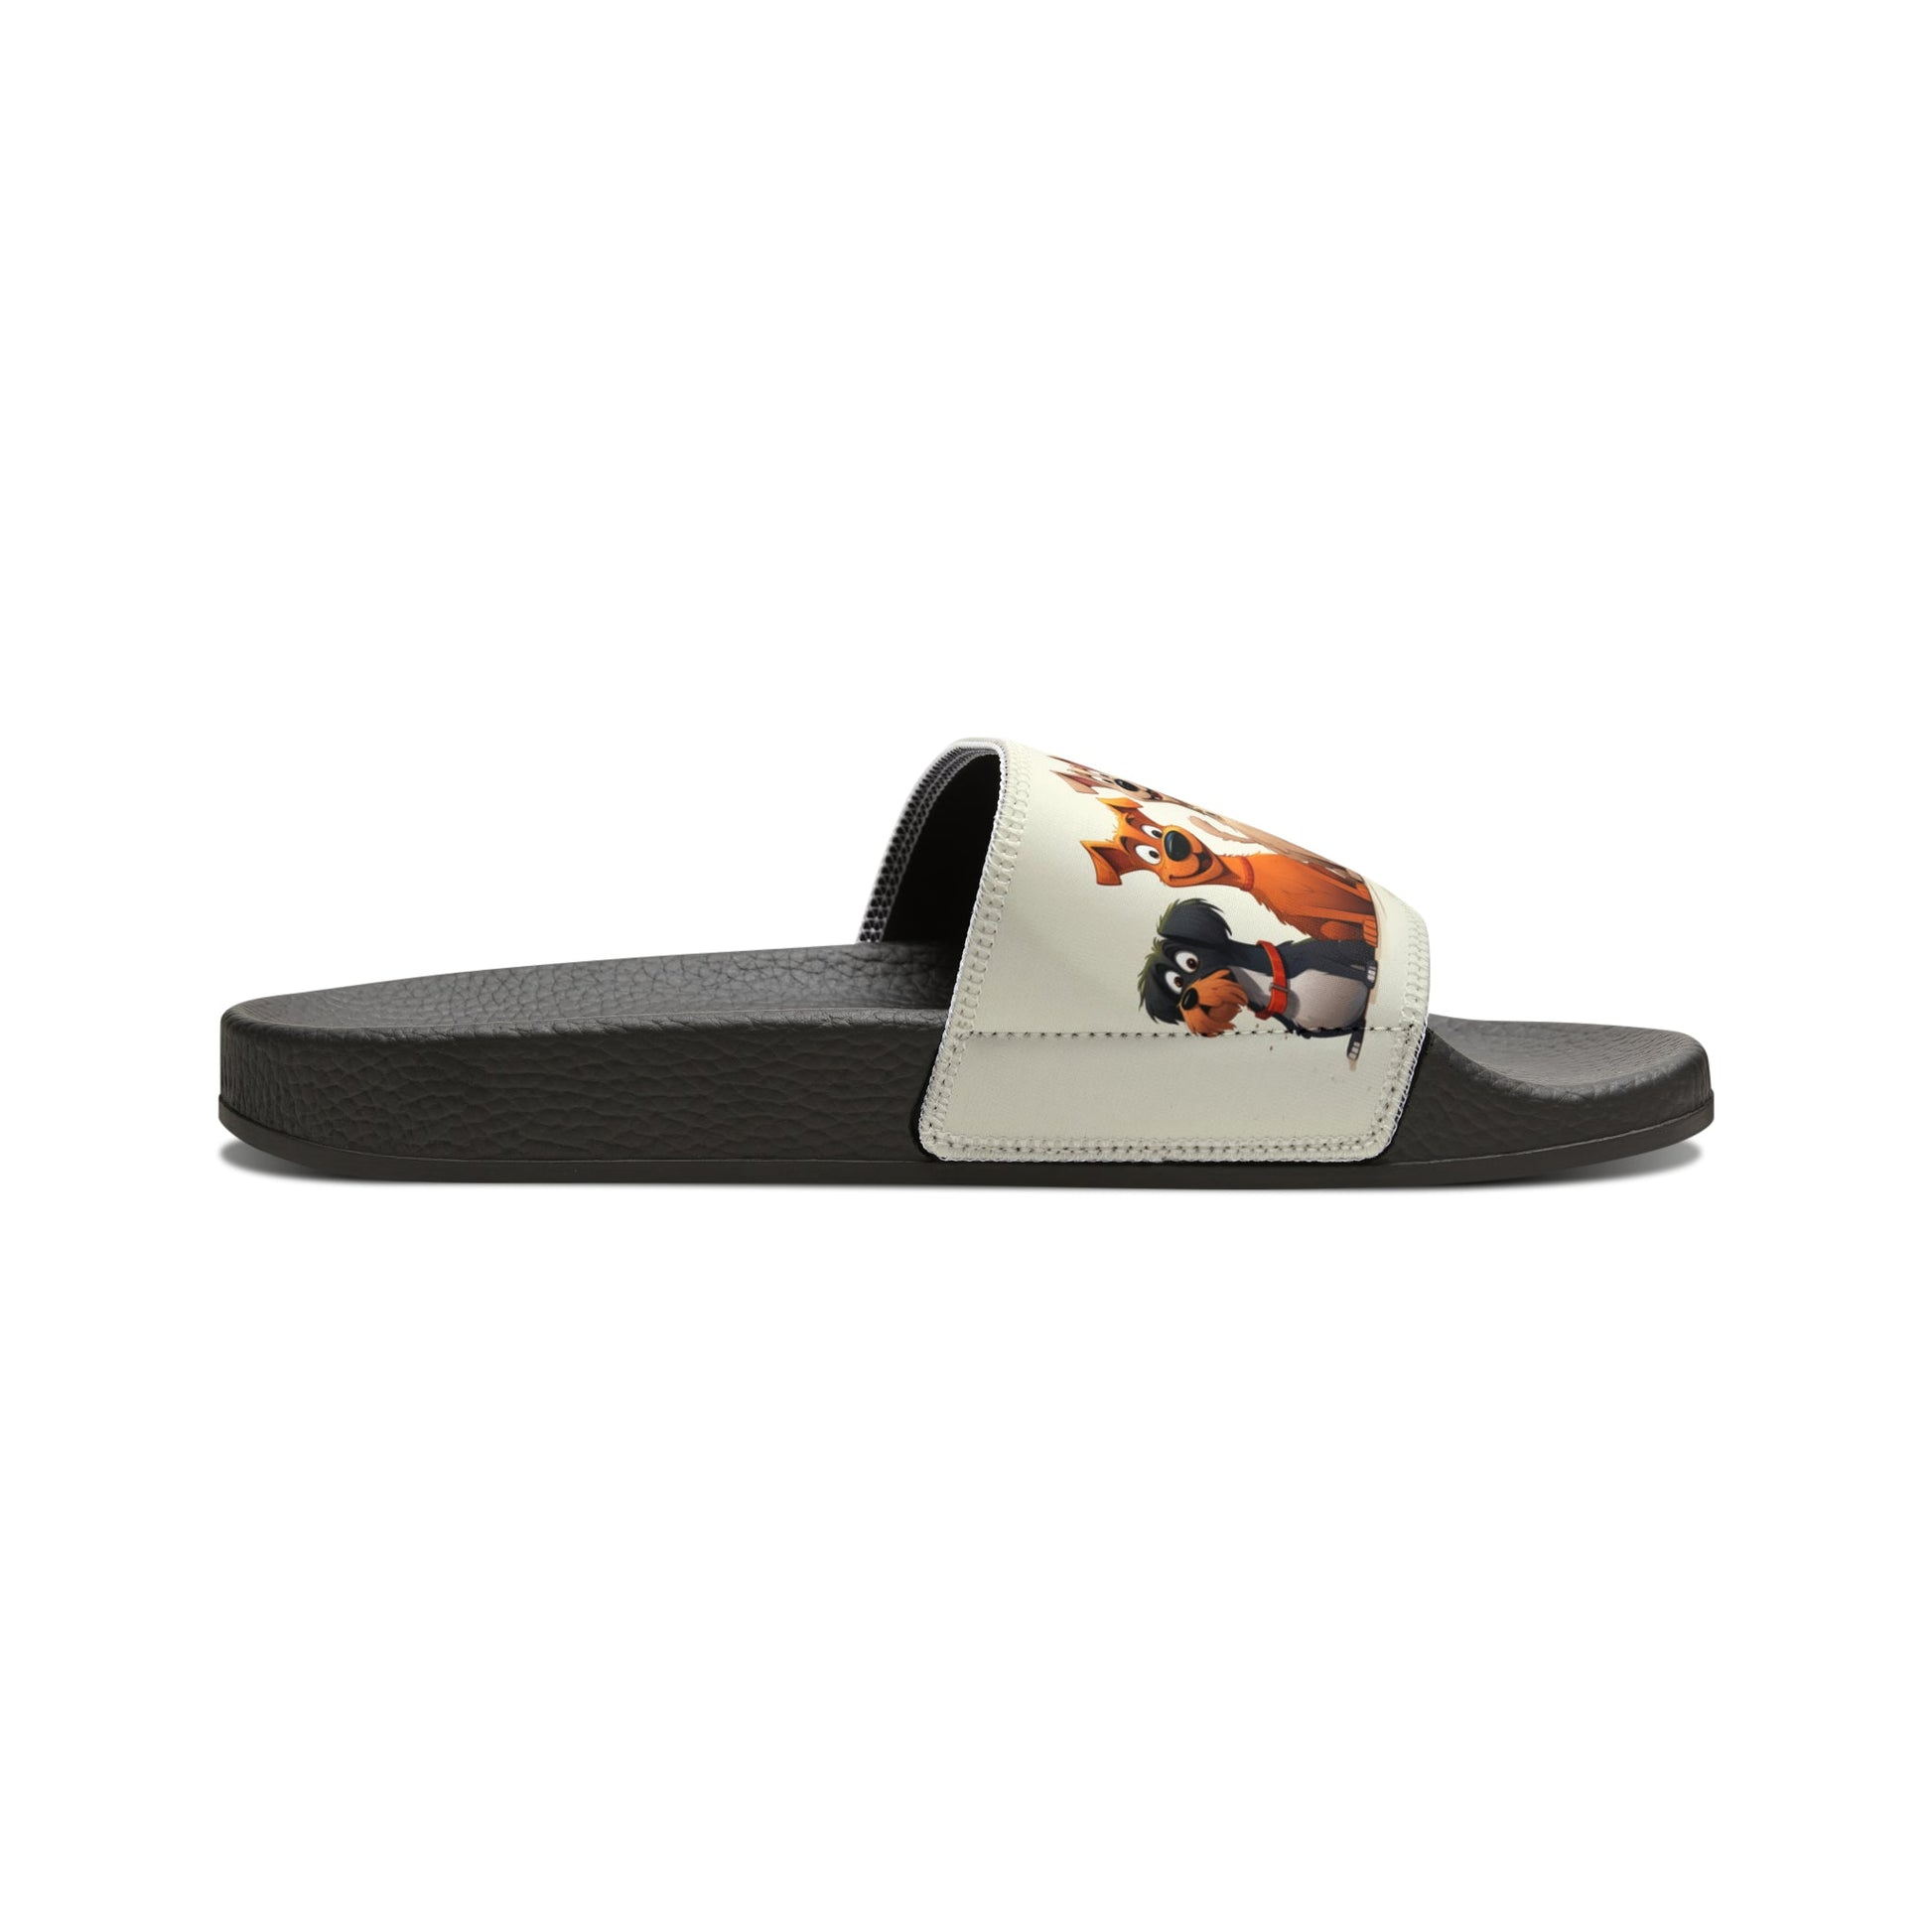 Cute Cartoon Dog Slide Sandals - Trendy Cartoon Dog Shoes, Loveable Mutt Shoes Dog Lover - FlooredByArt